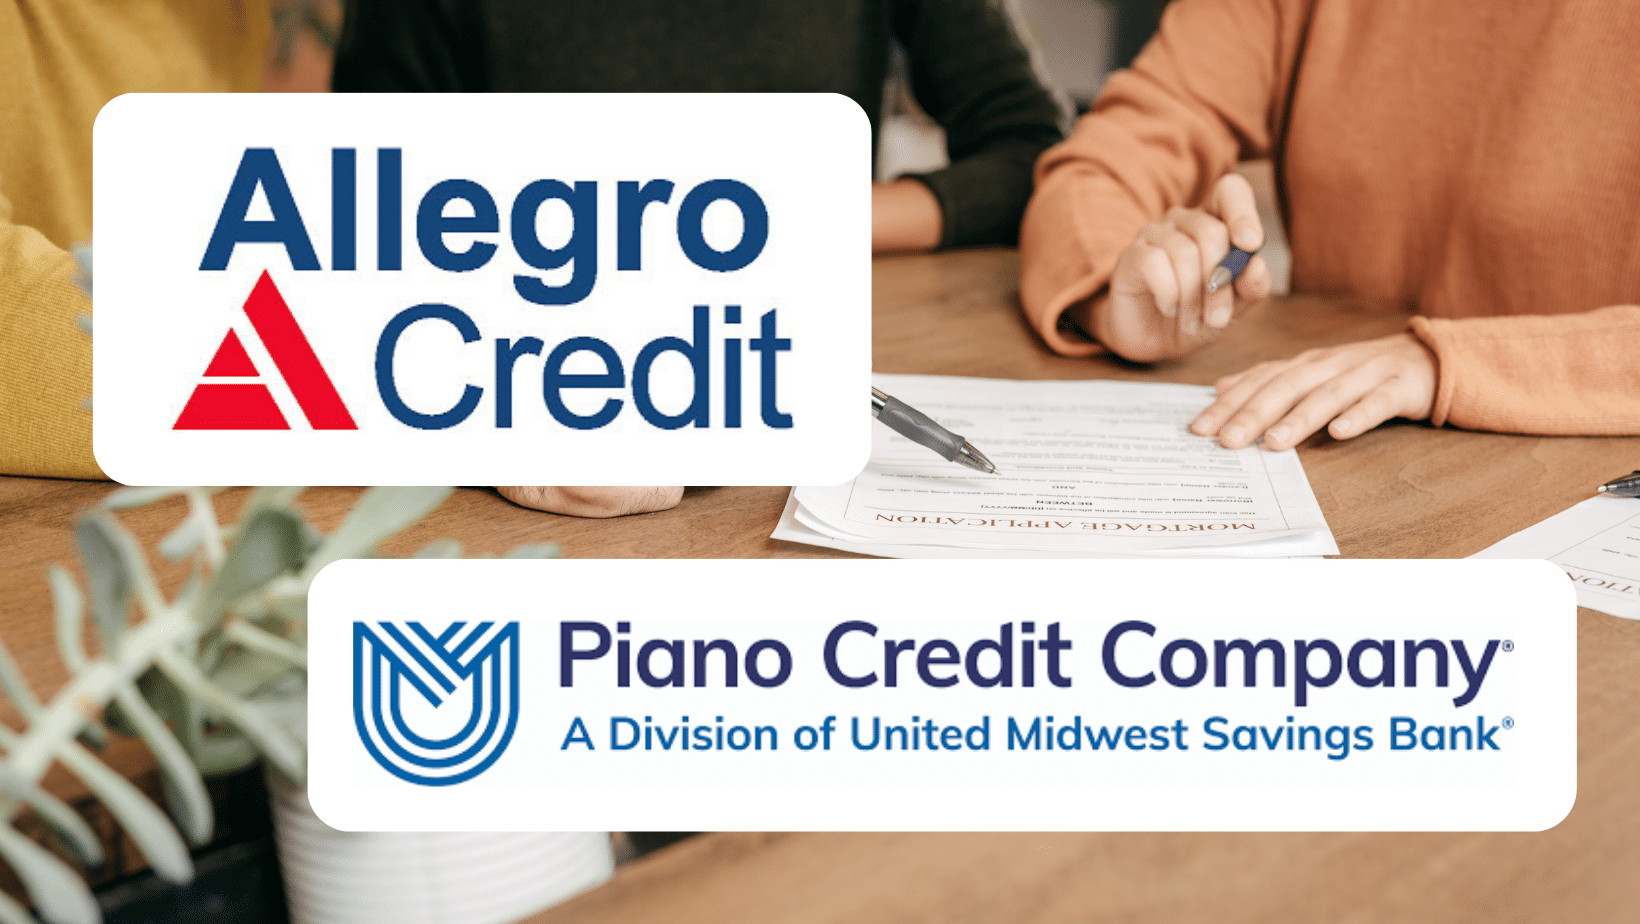 Piano Financing Companies Allegro Credit and Piano Credit Company